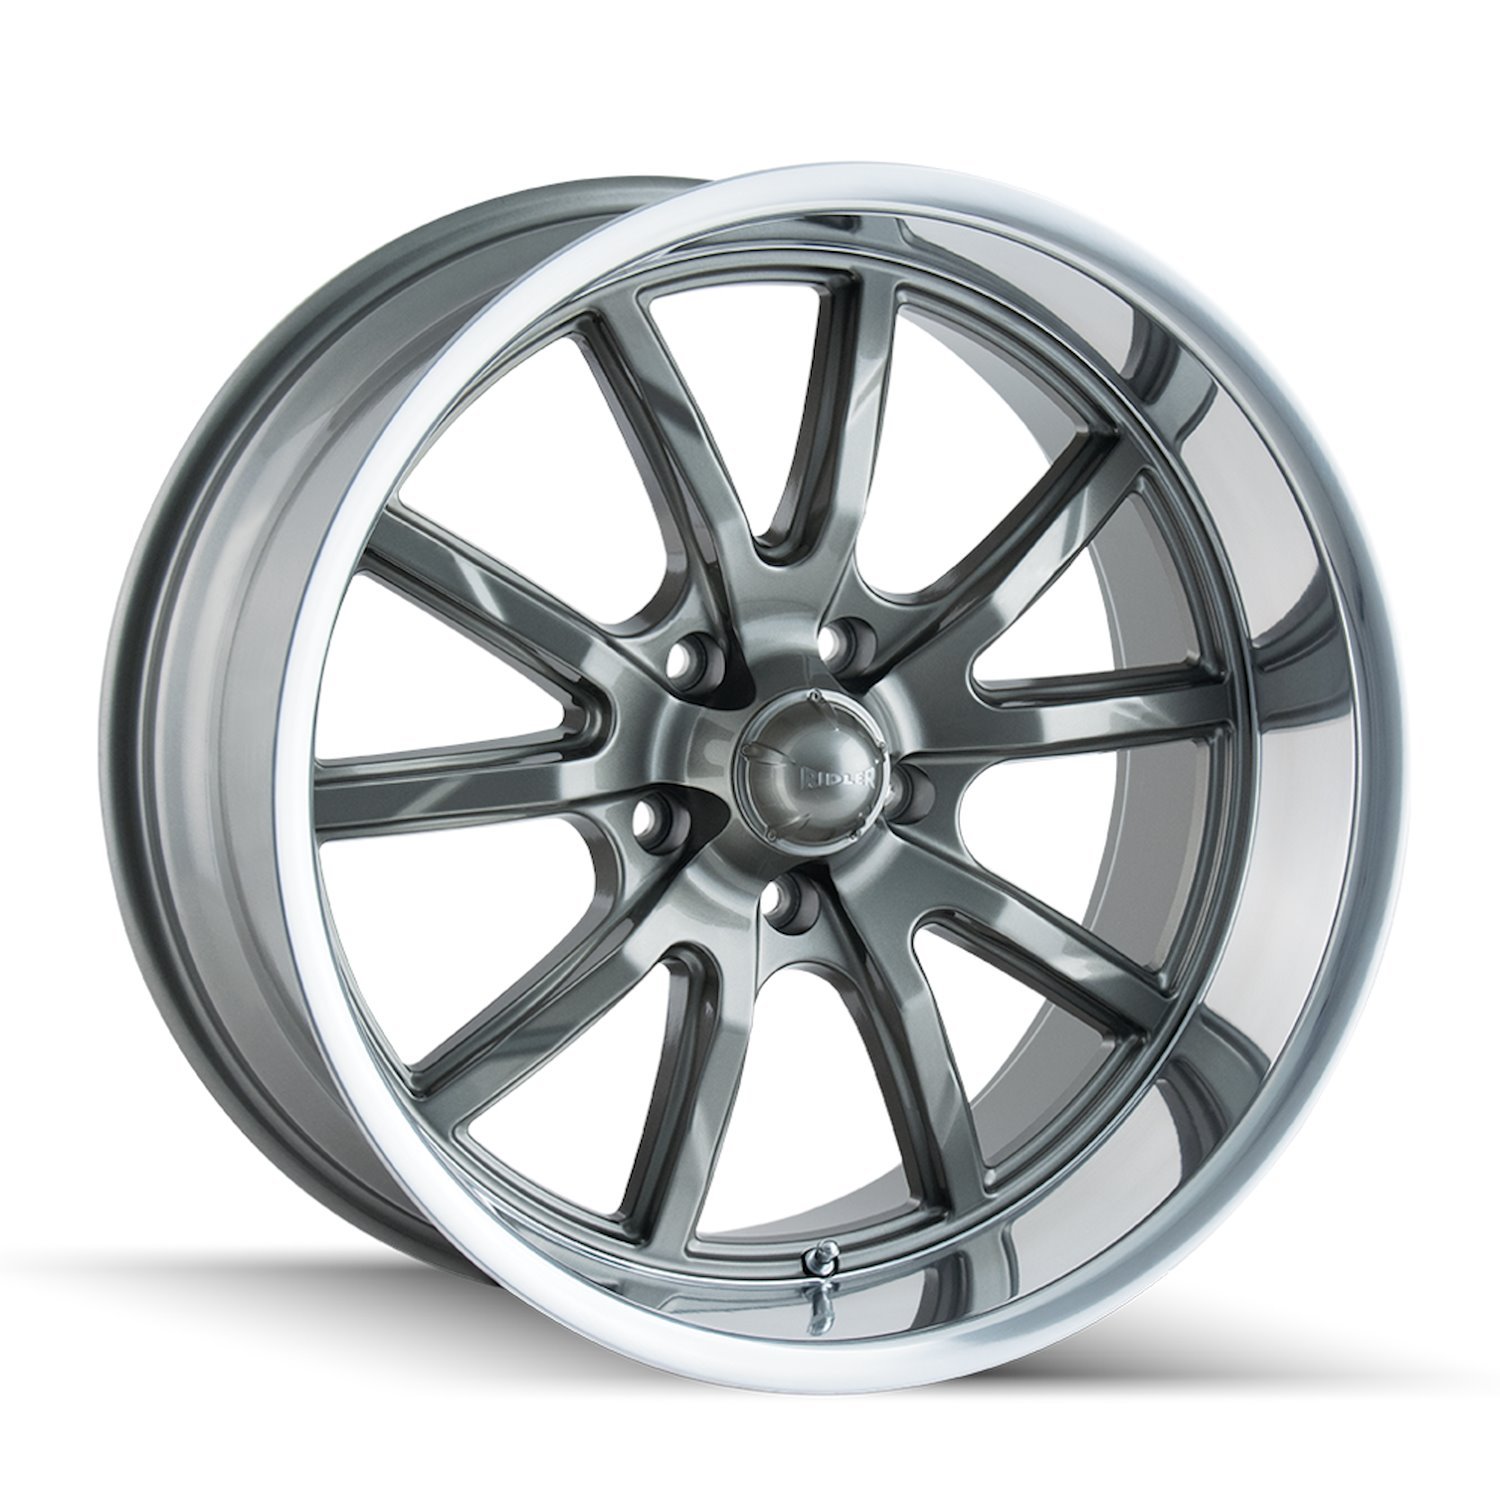 650-8973G 650-Series Wheel [Size: 18" x 9.50"] Gloss Grey Polished Finish